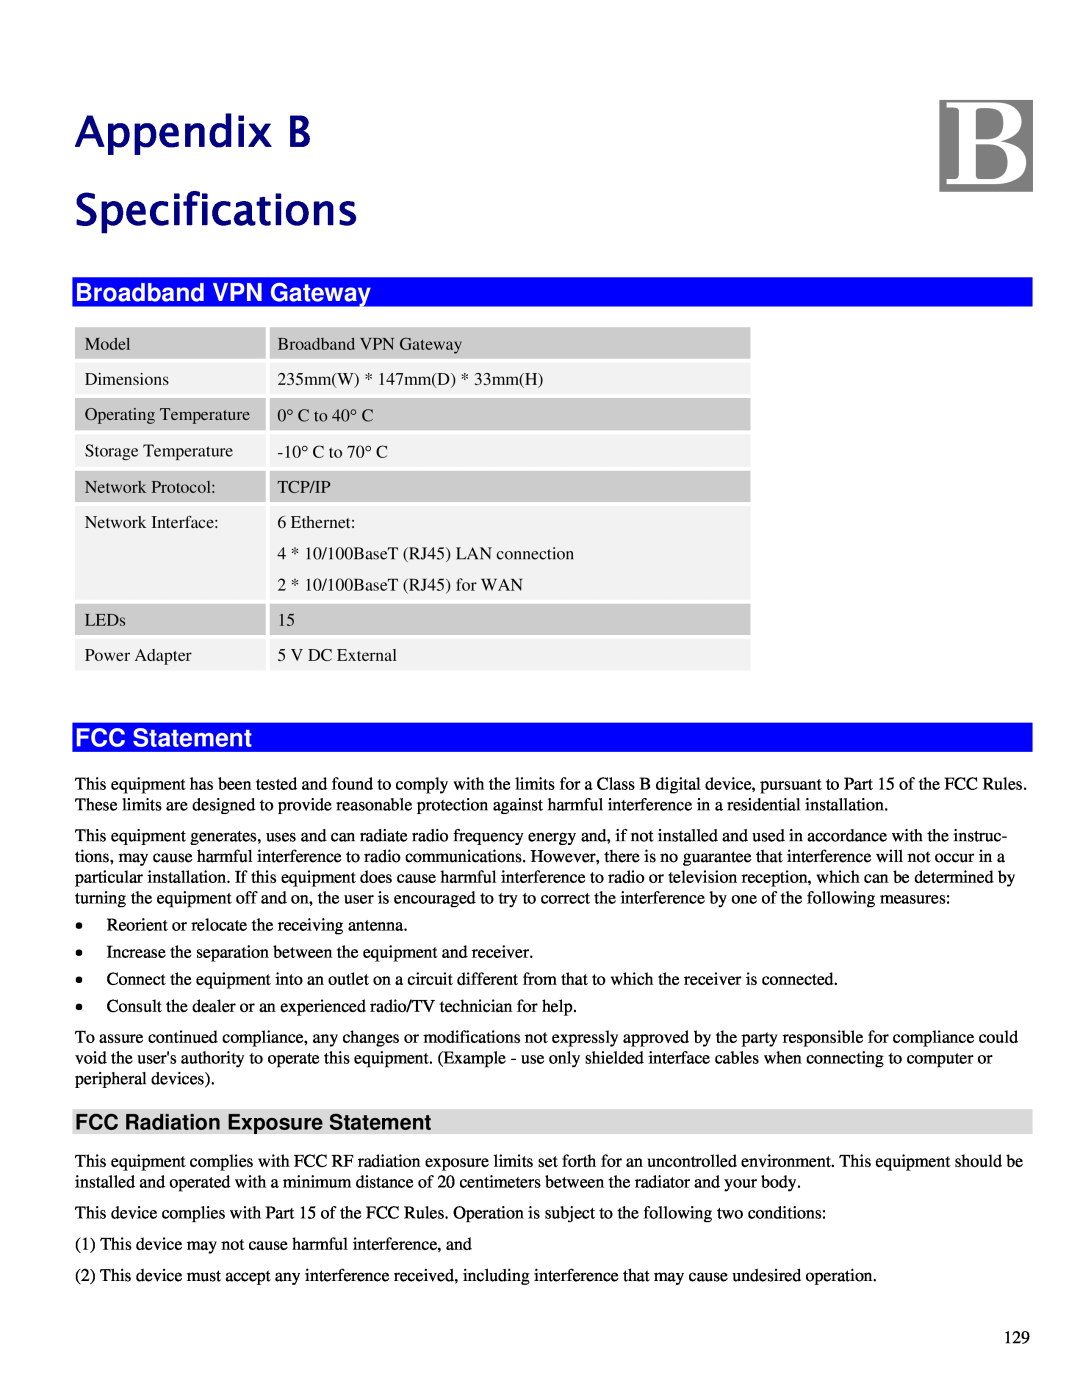 TRENDnet TW100-BRV324 Appendix B Specifications, Broadband VPN Gateway, FCC Statement, FCC Radiation Exposure Statement 